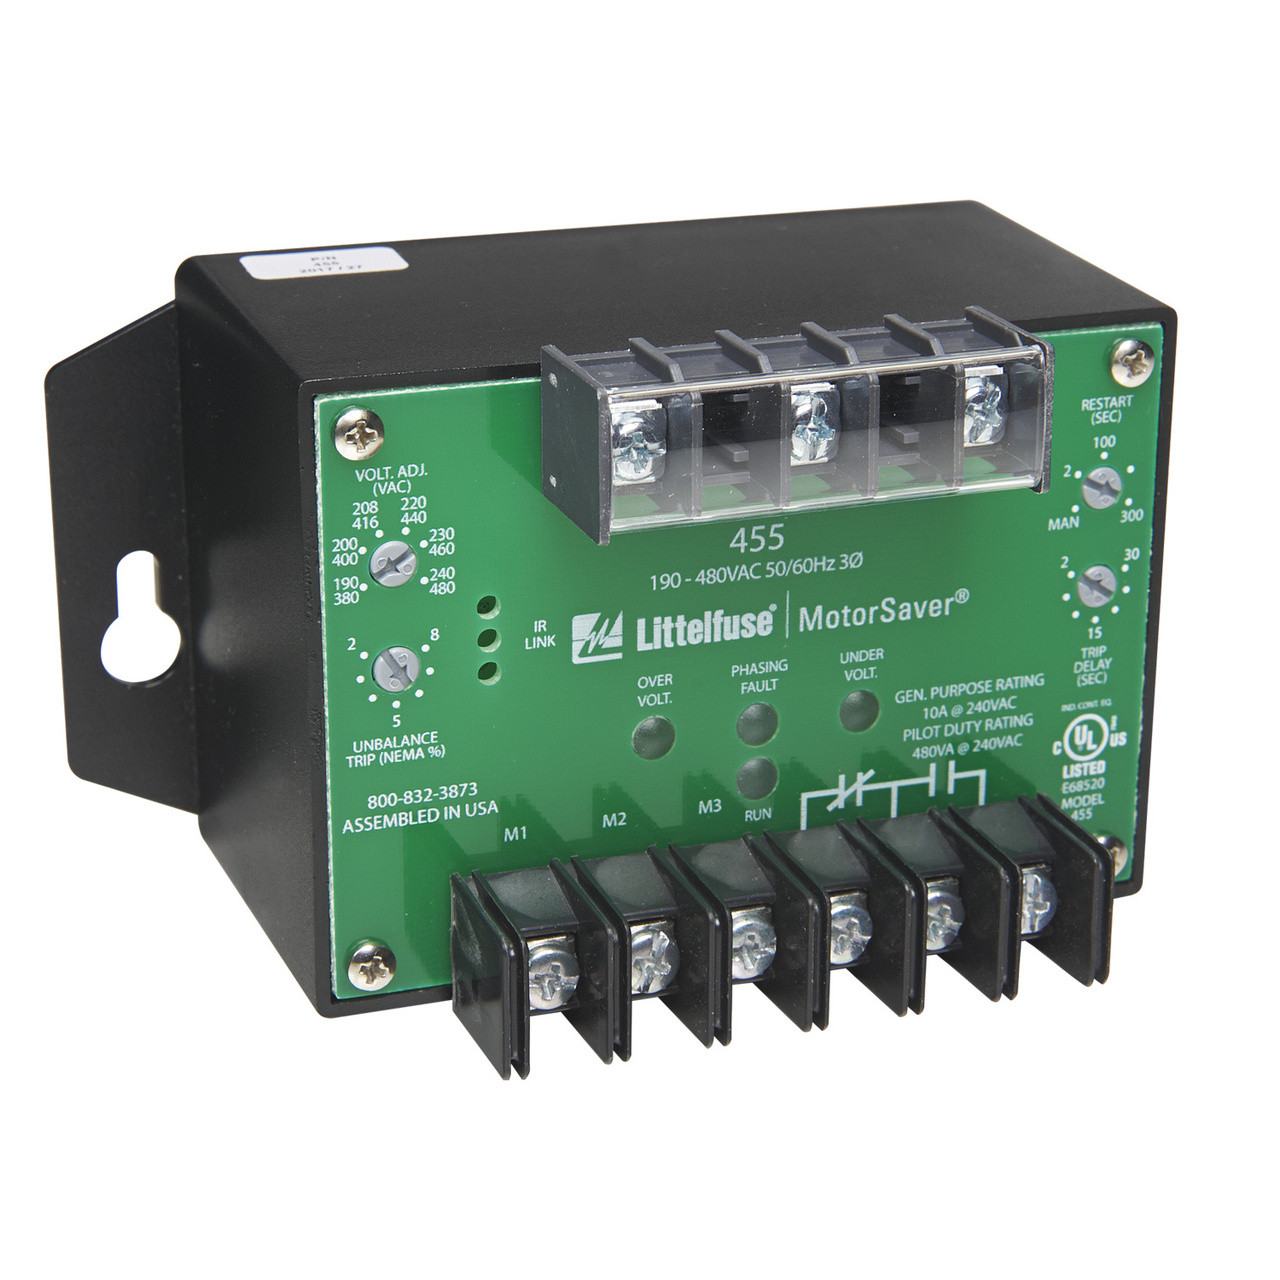 Littelfuse-Symcom 455575 Voltage Monitor Relays